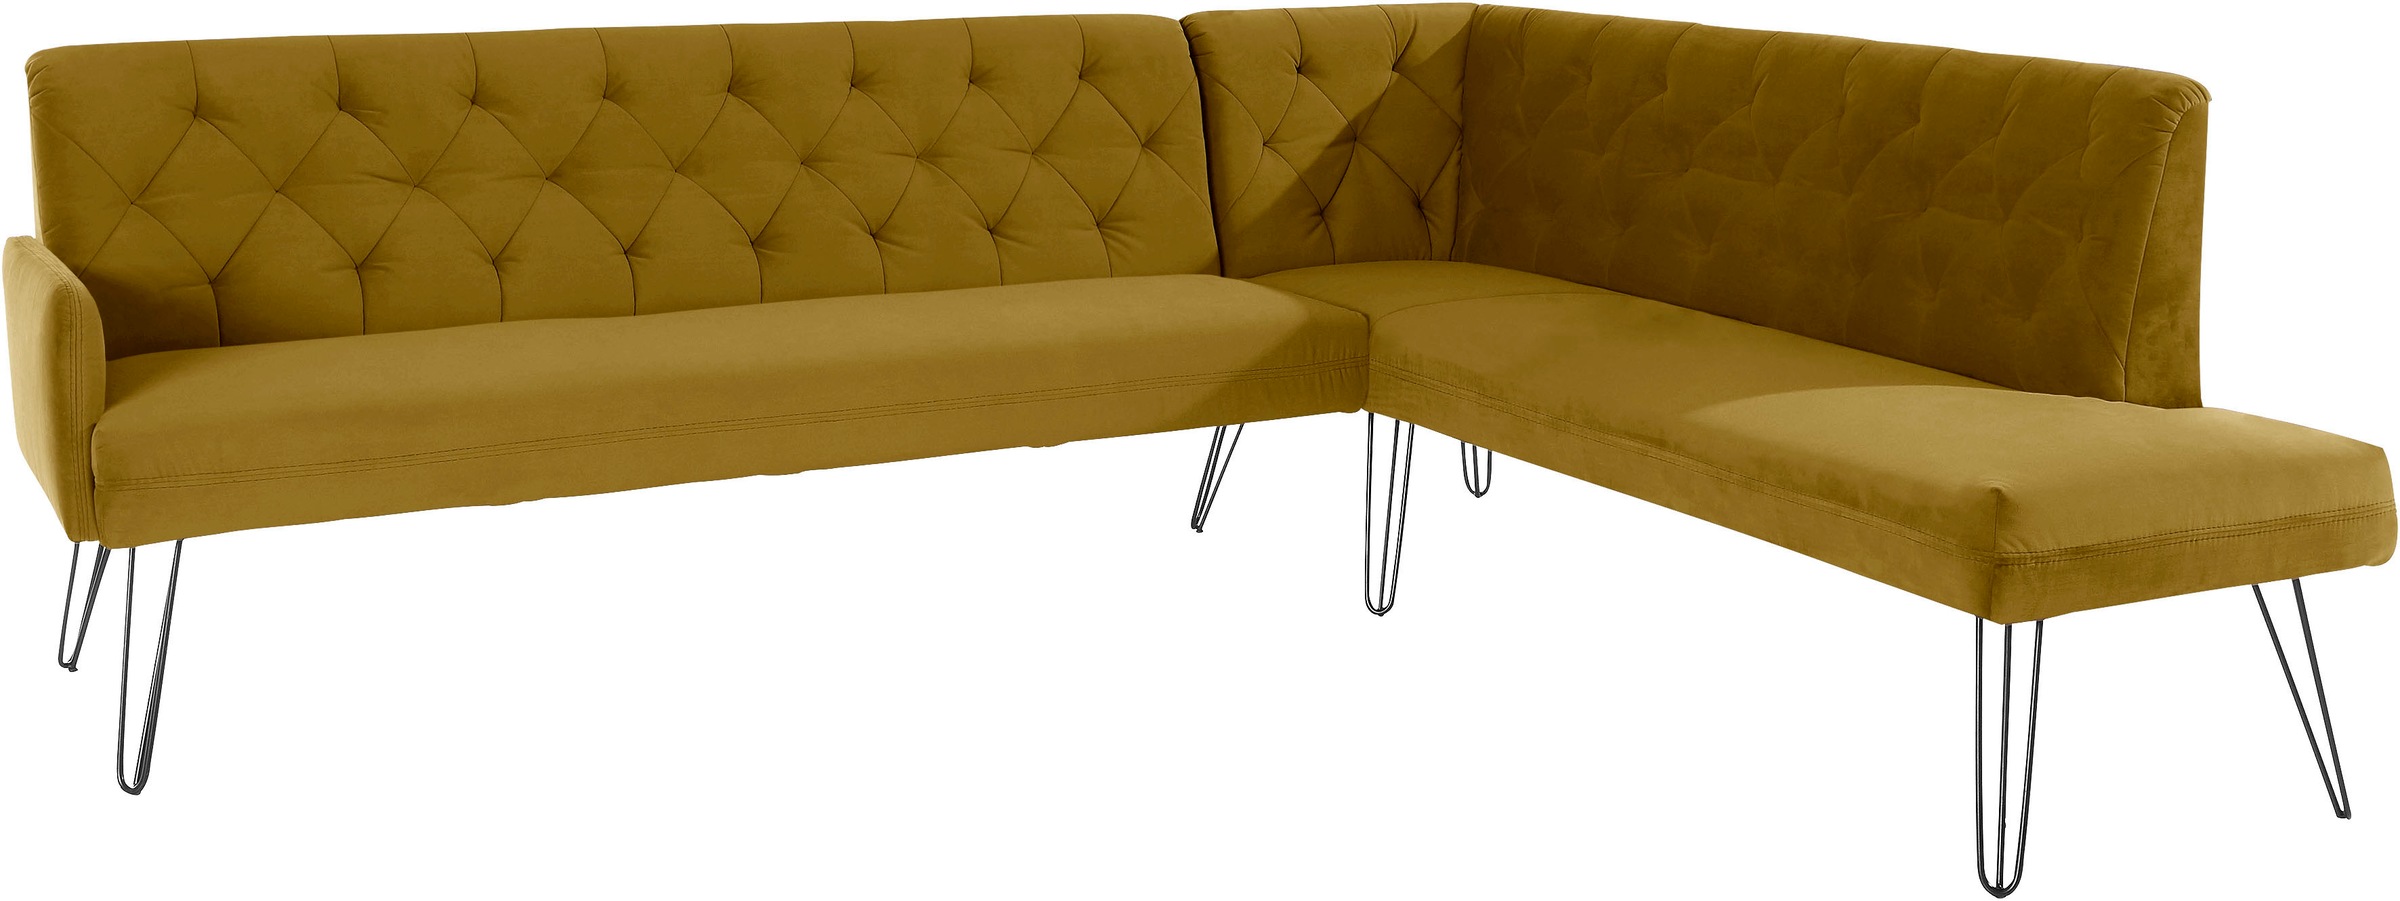 stellbar Eckbank exxpo - Frei sofa fashion »Doppio«, im Raum kaufen online